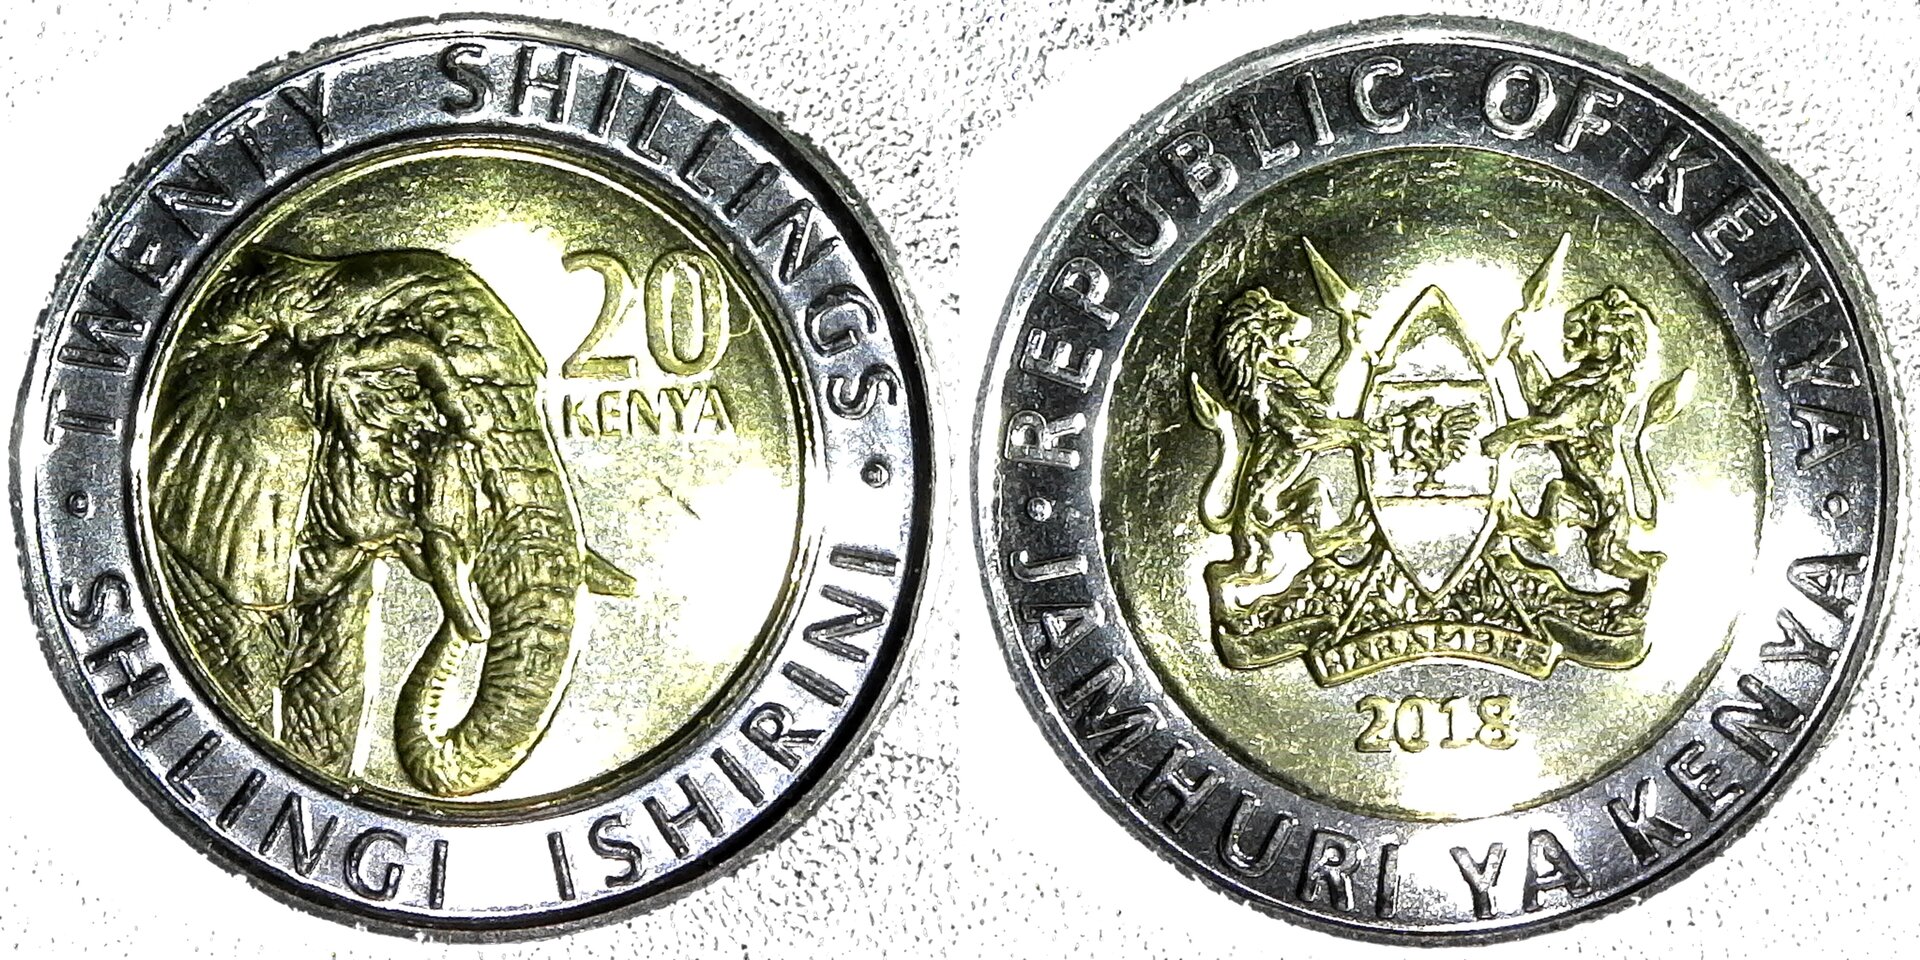 Kenya 20 shillings 2018 rev-side-cutout.jpg